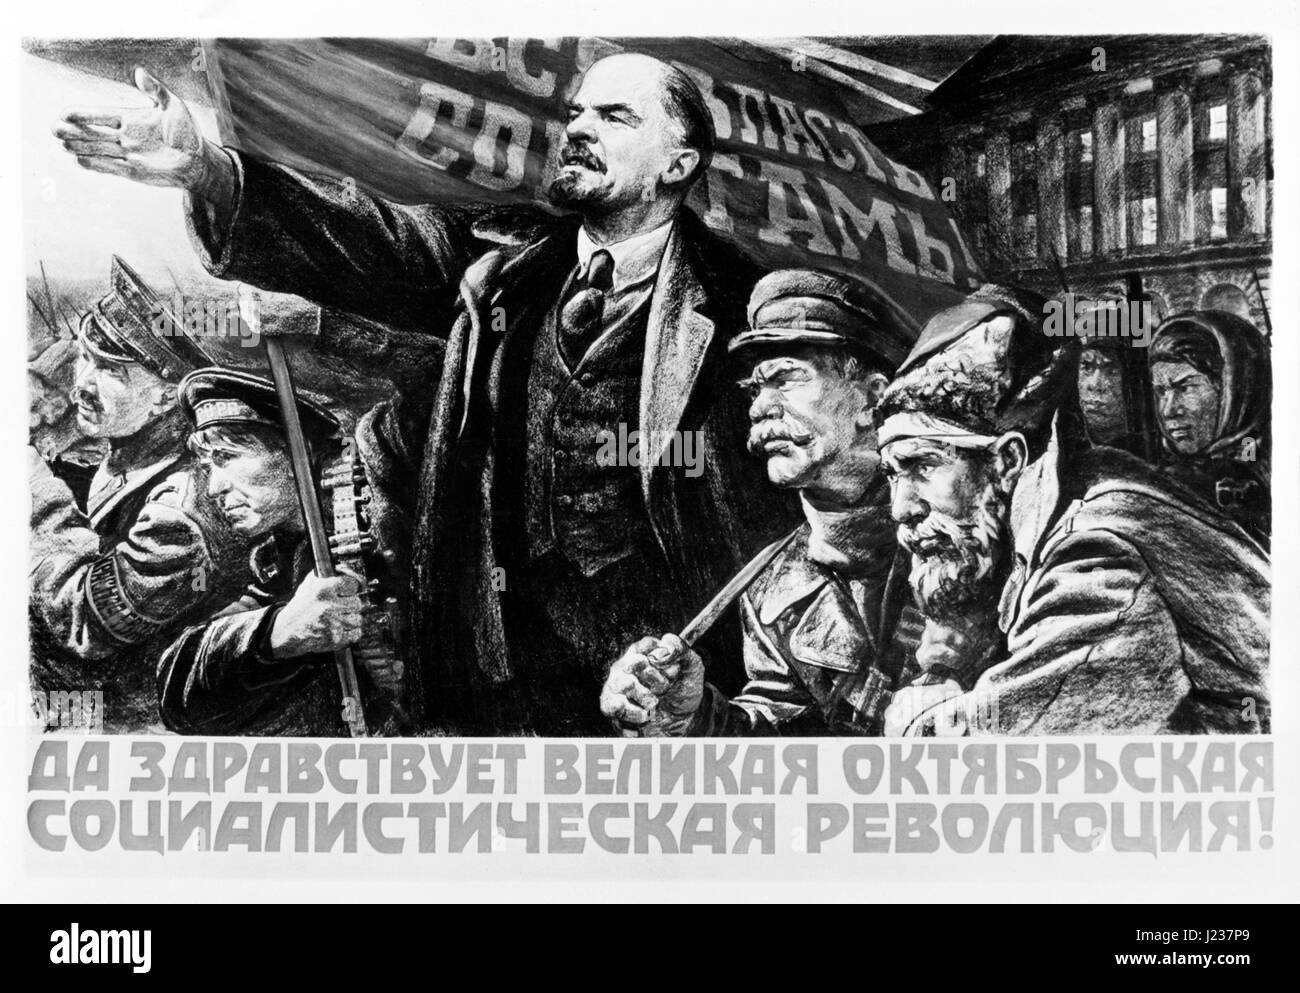 Póster soviético con la cita: "Viva la Gran Revolución Socialista de Octubre!". La obra es del artista A. Kuznetsov. Editorial IZOGIZ. Foto de stock